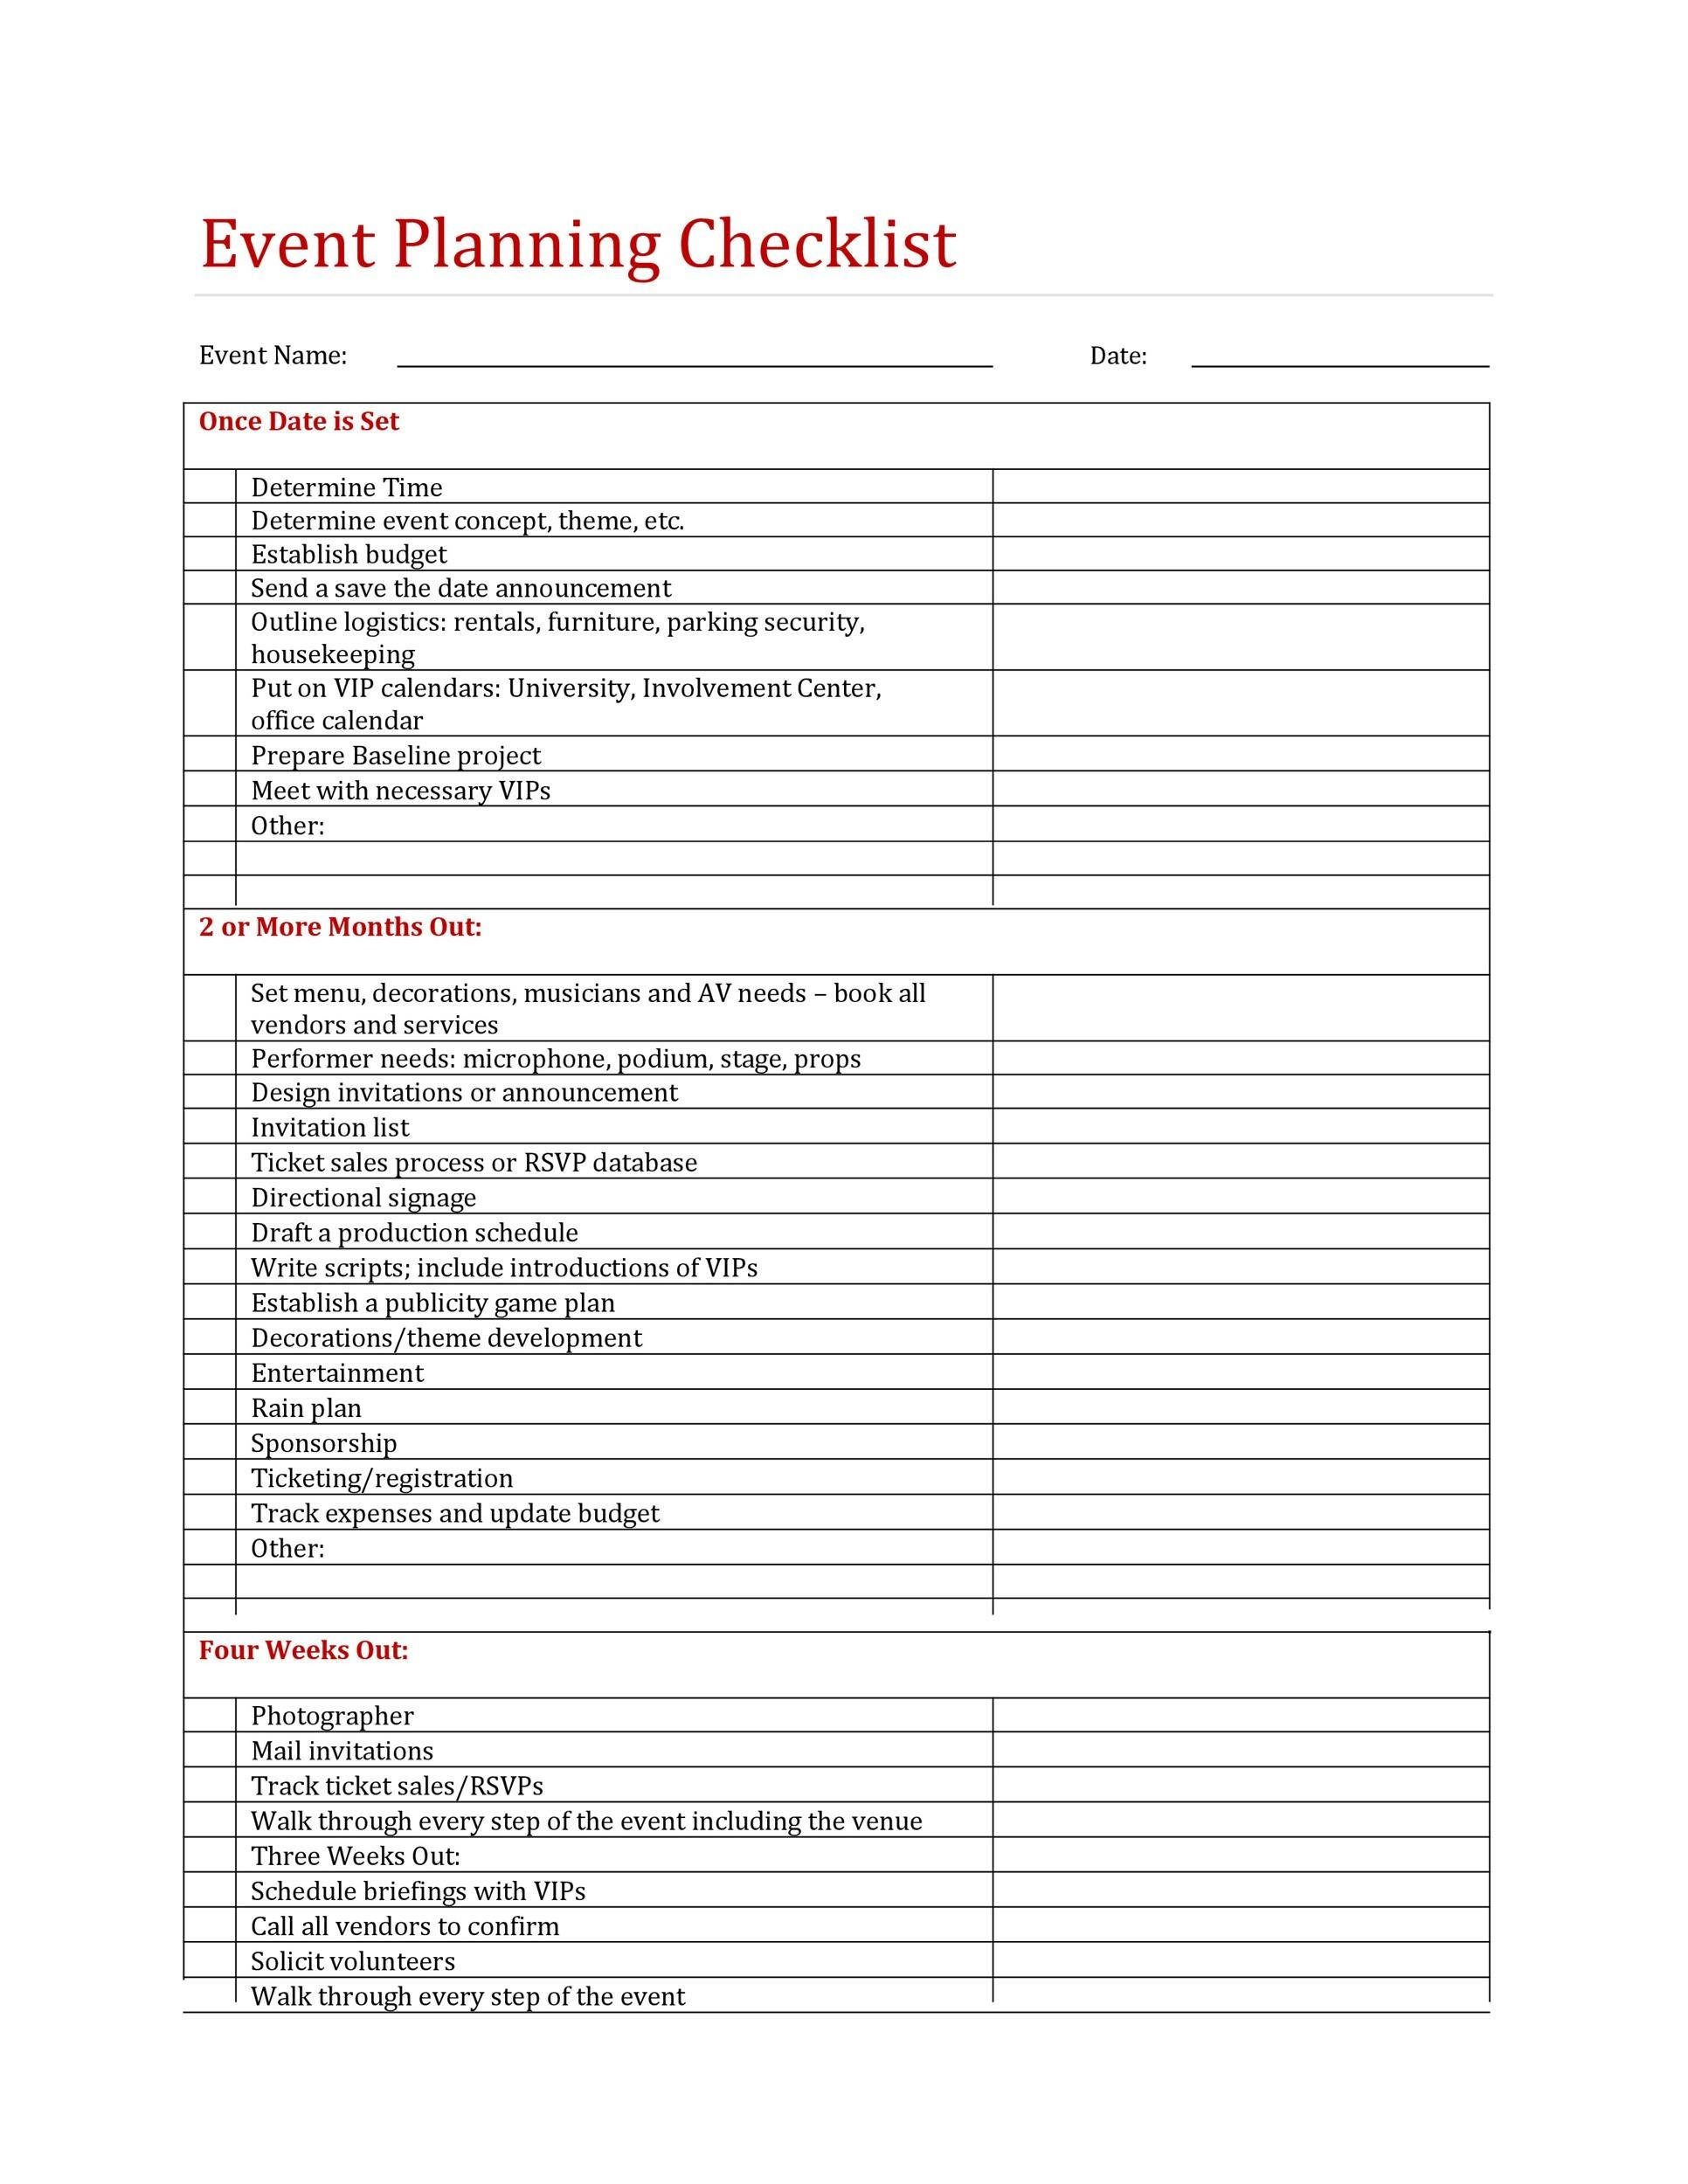 10 Professional Event Planning Checklist Templates ᐅ TemplateLab Regarding Festival Planning Checklist Template With Festival Planning Checklist Template